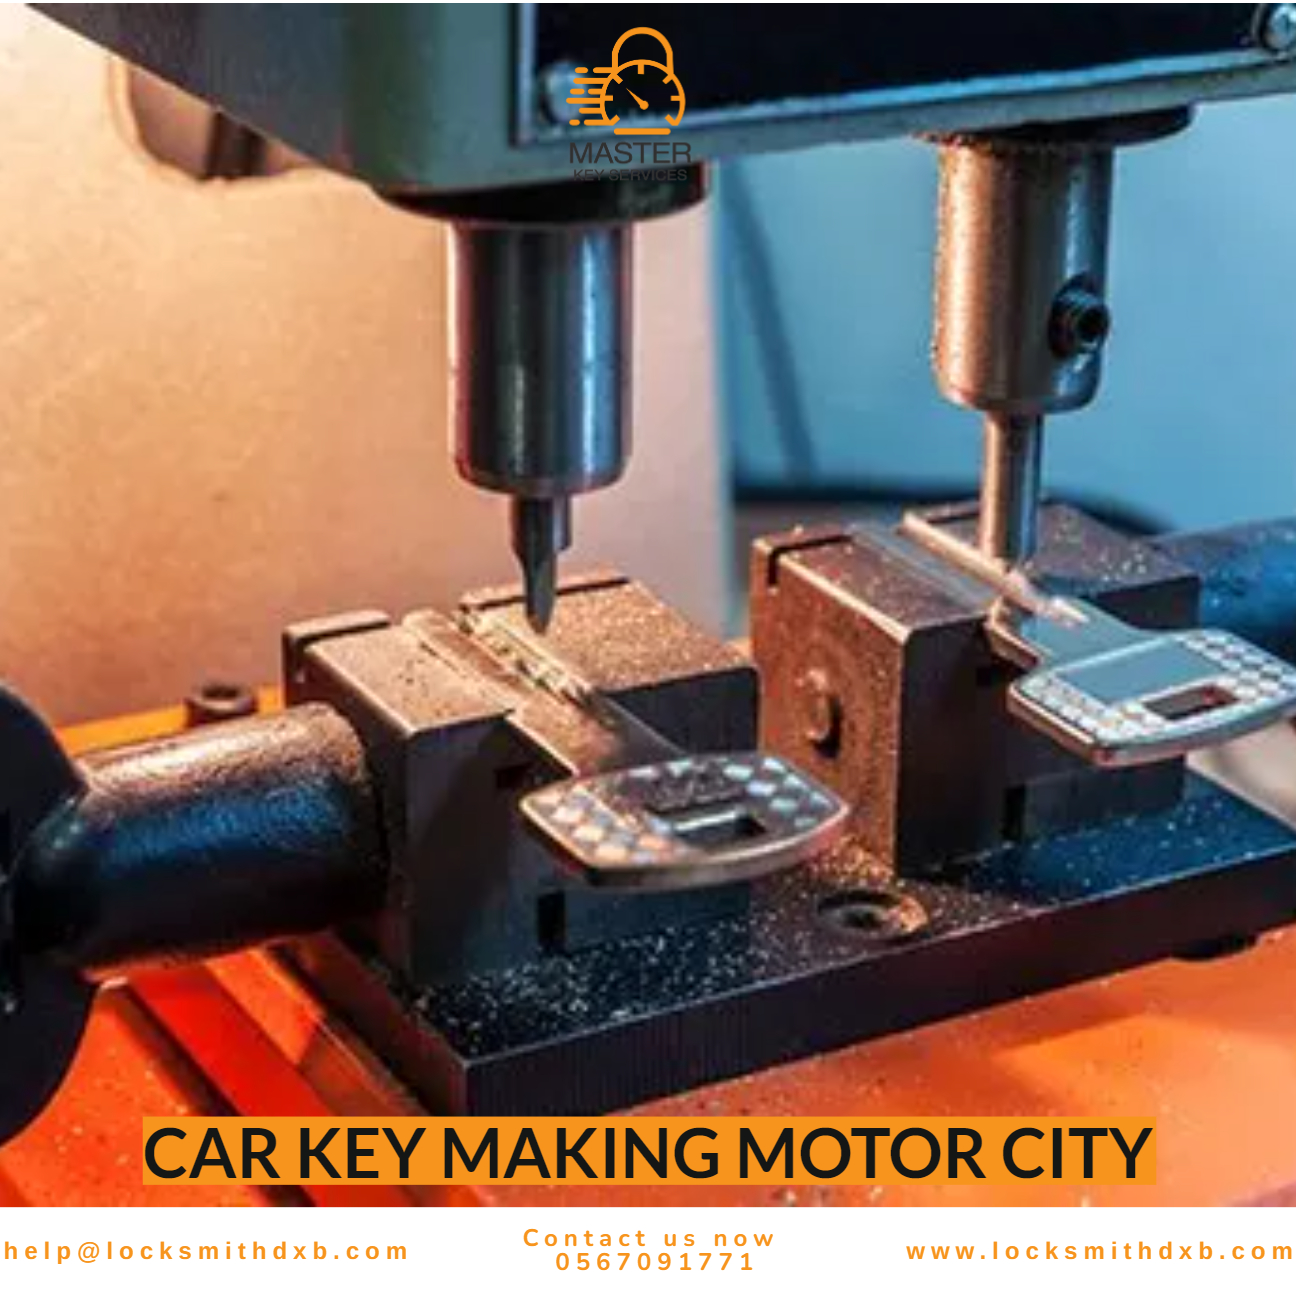 Car key making motor city